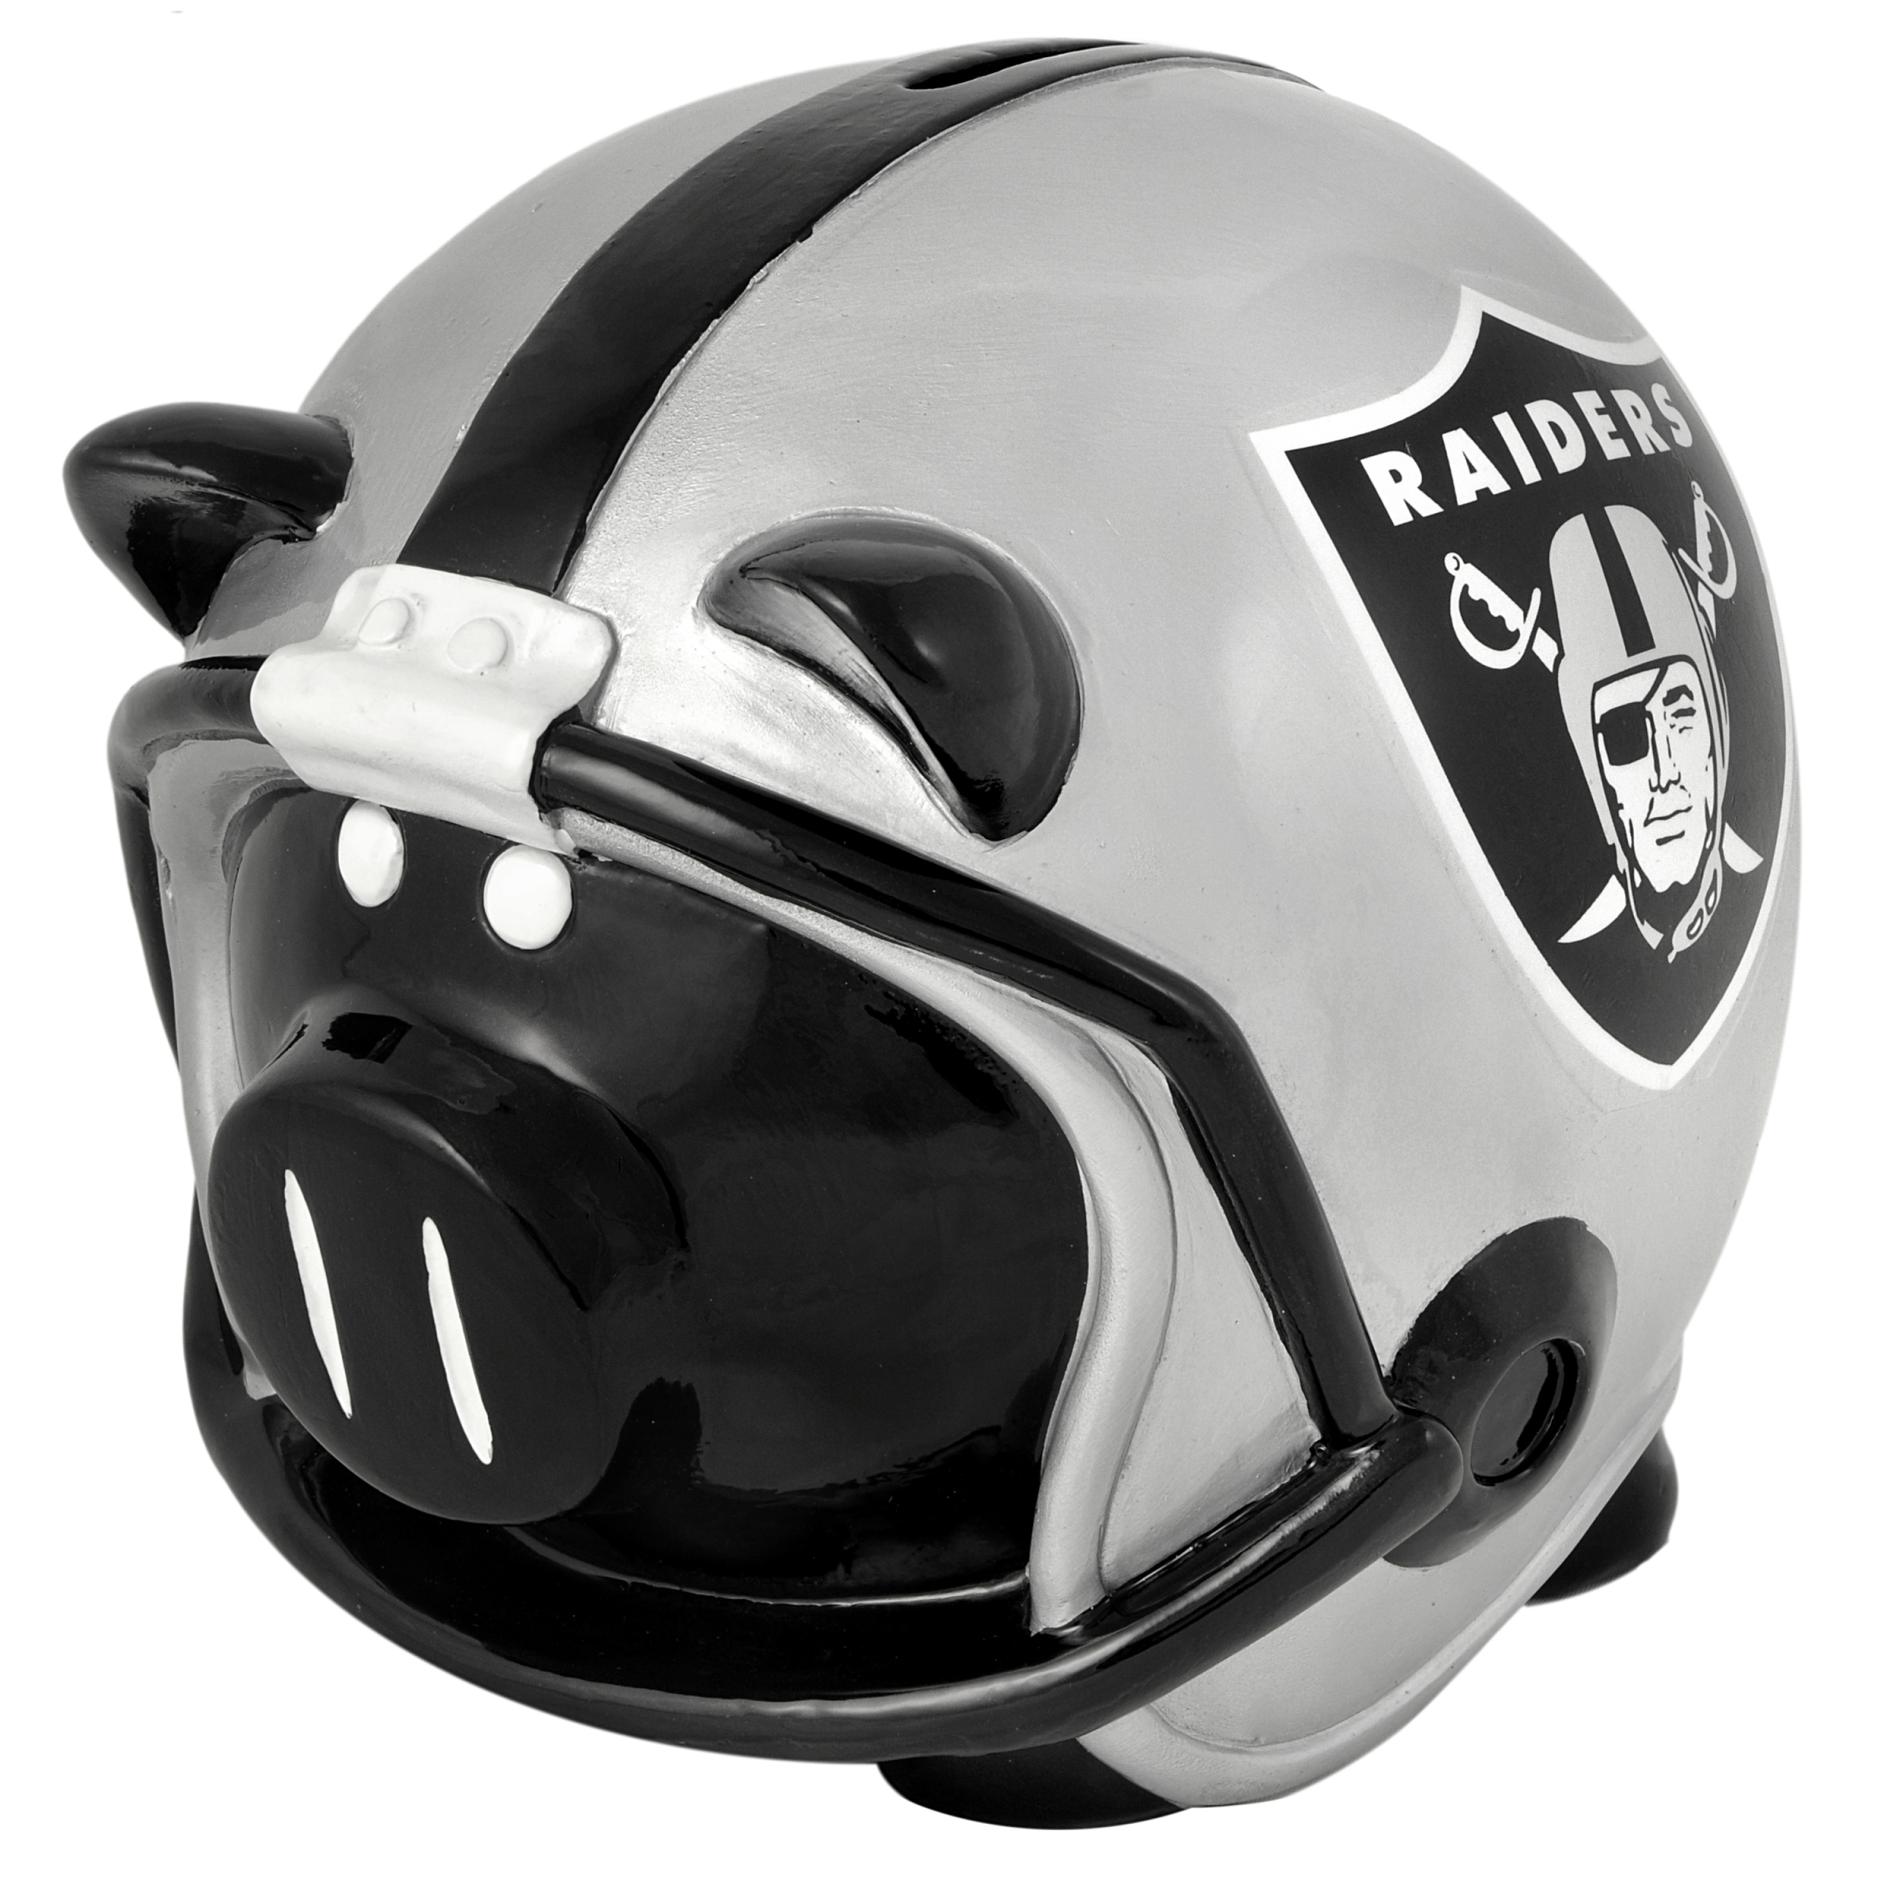 NFL Helmet Piggy Bank - Oakland Raiders1900 x 1900